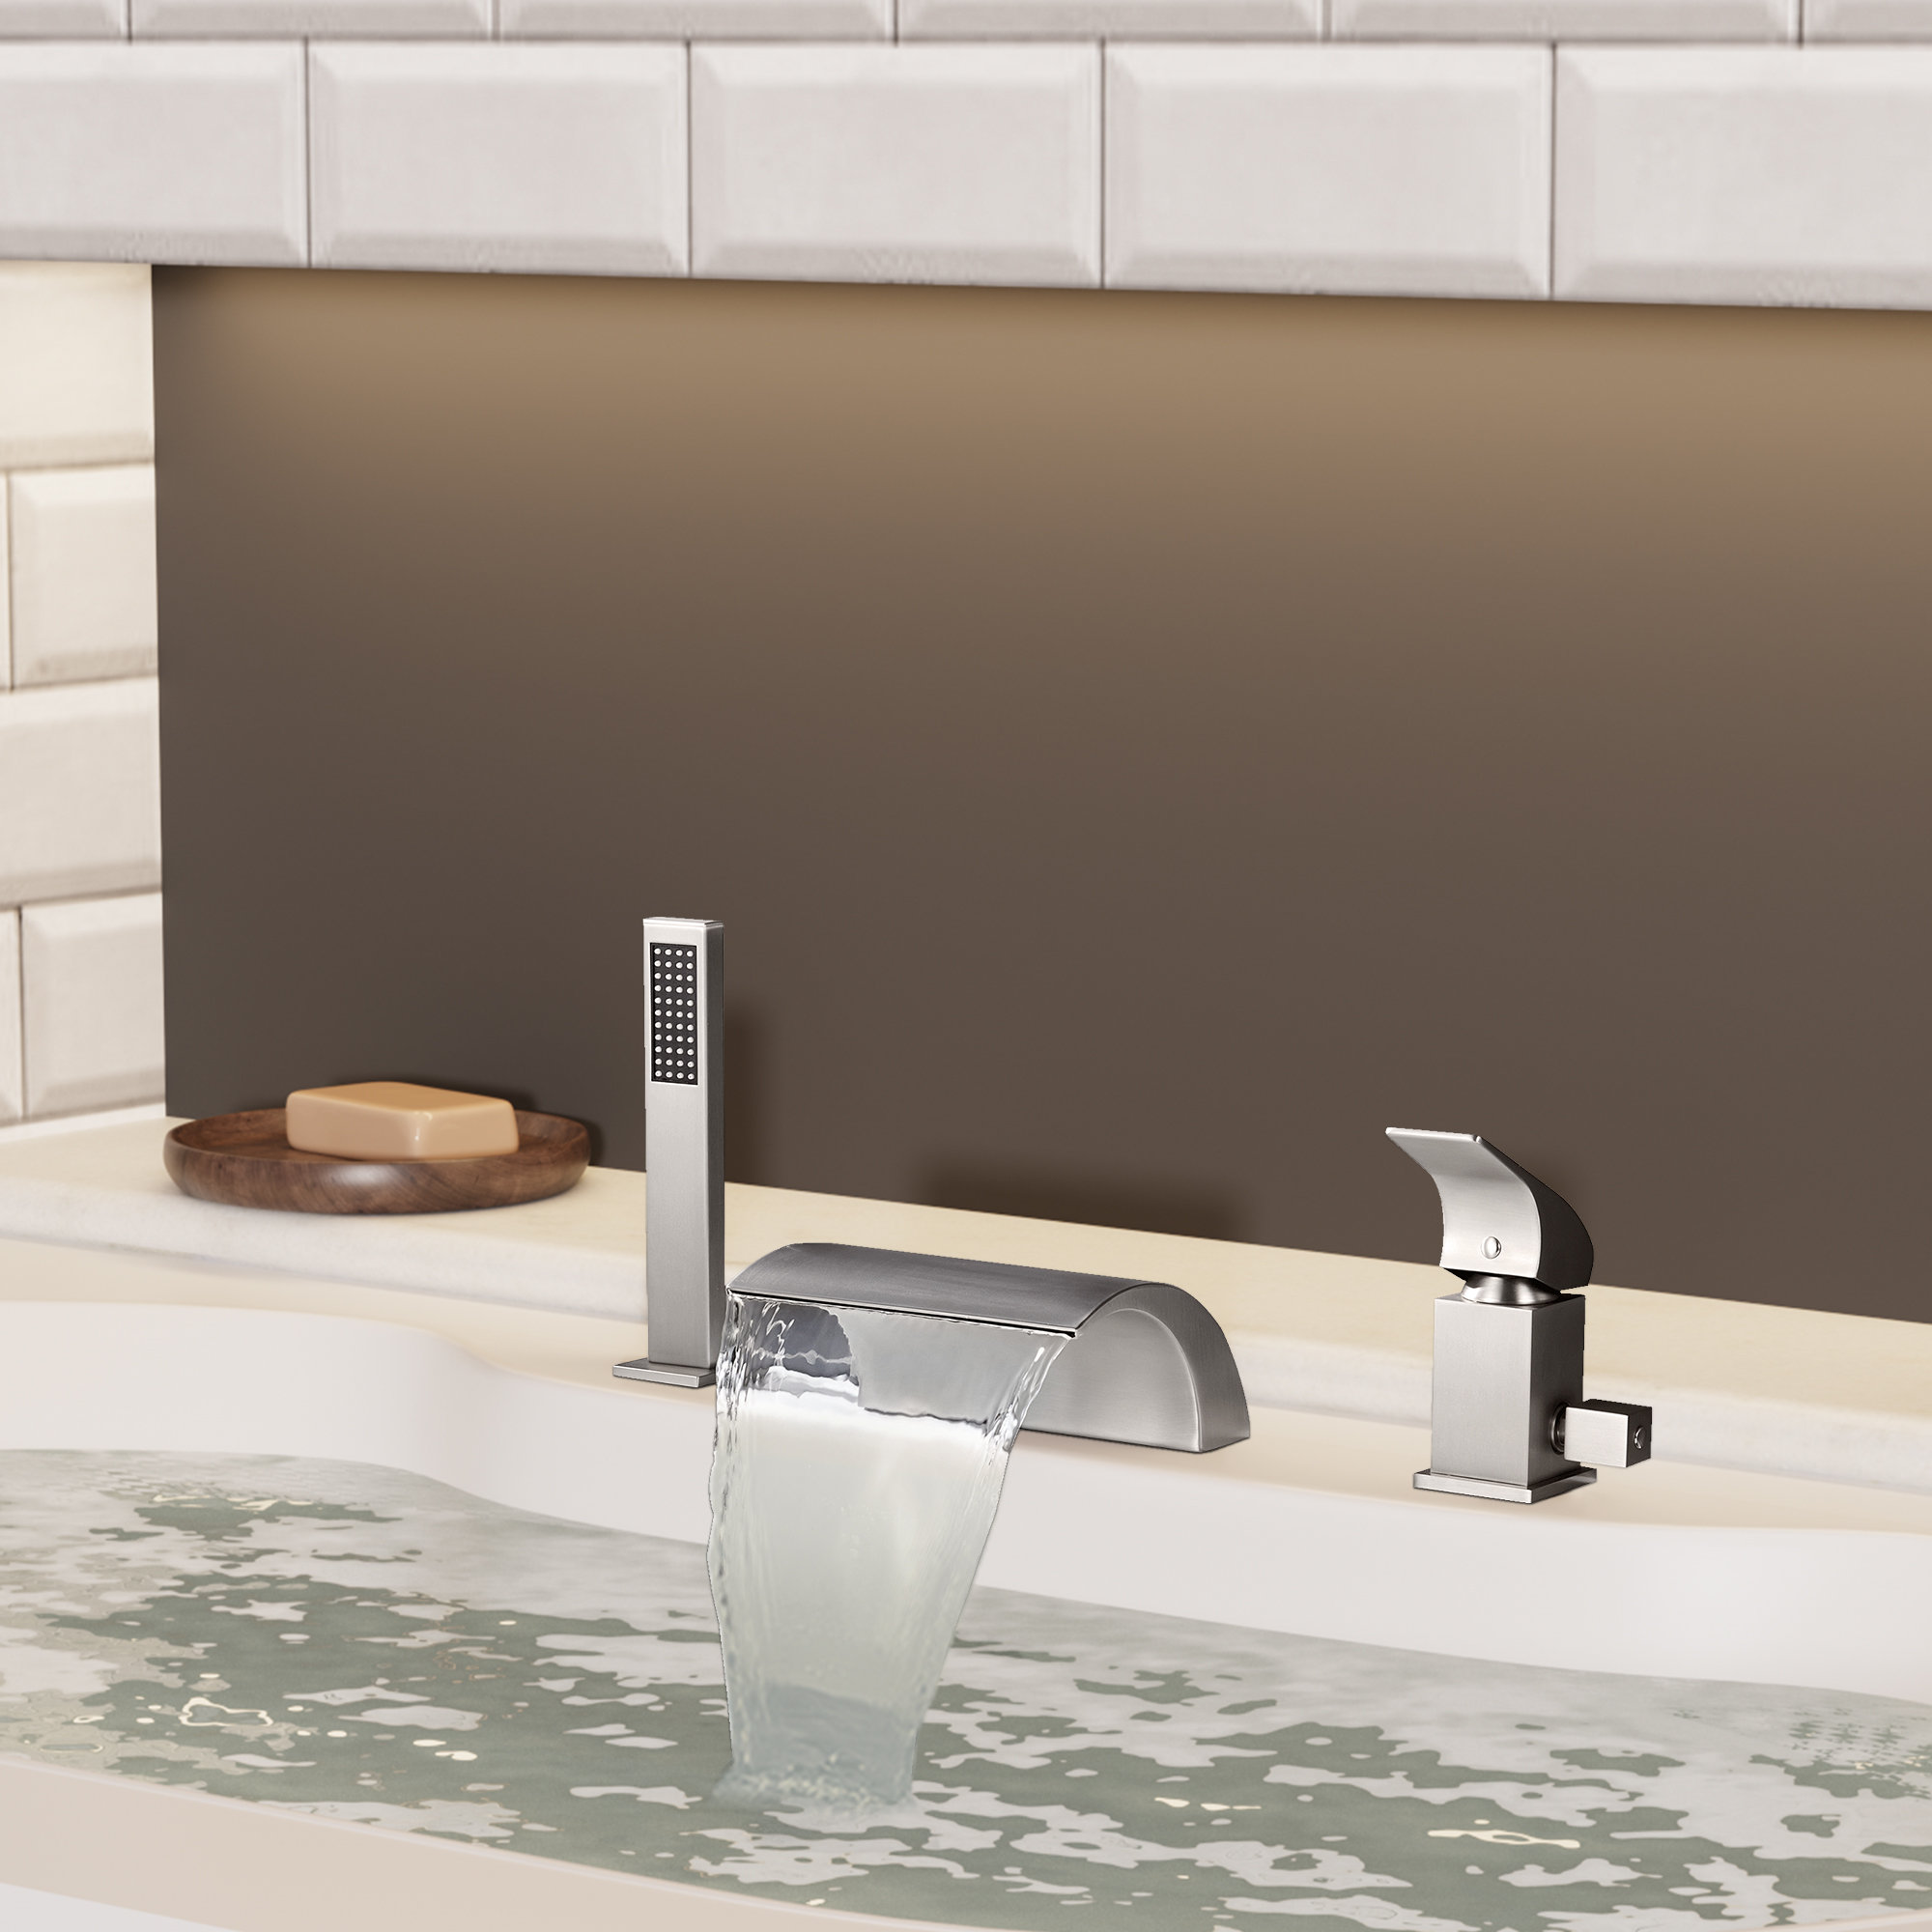 CASAINC Tub Faucets Deck Mounted Tub Spout with Diverter and Handshower   Reviews Wayfair